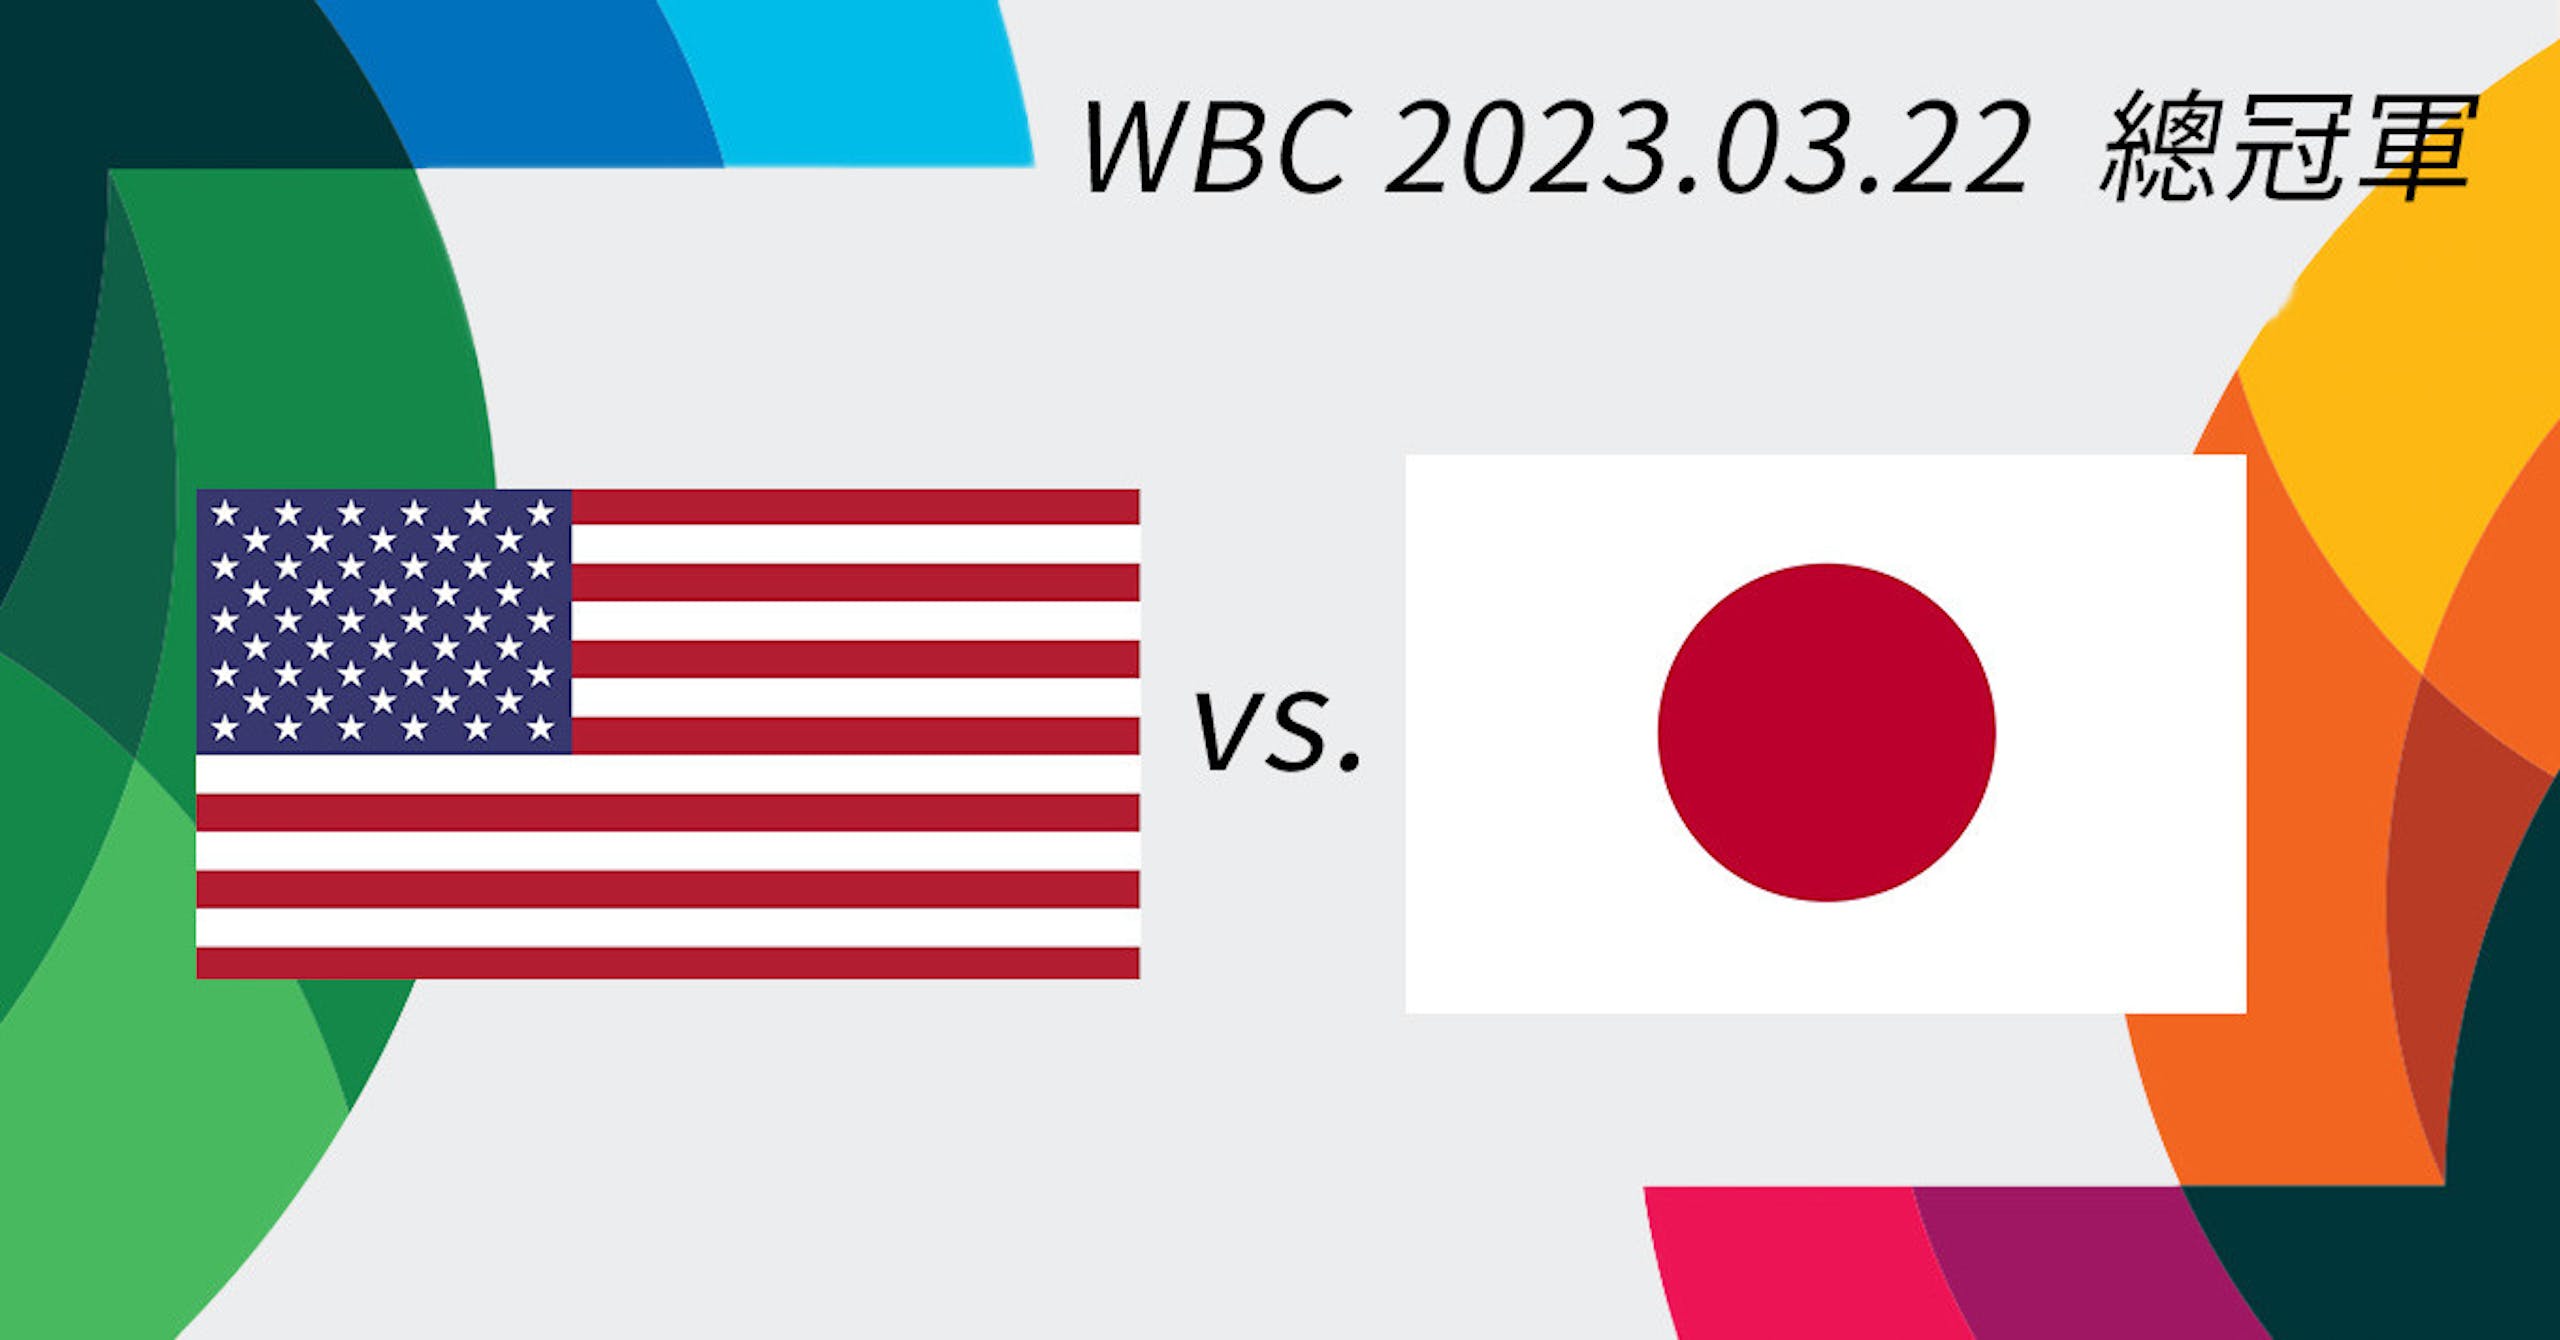 WBC冠軍賽 美國vs.日本 棒球經典賽決賽直播線上看、轉播時間